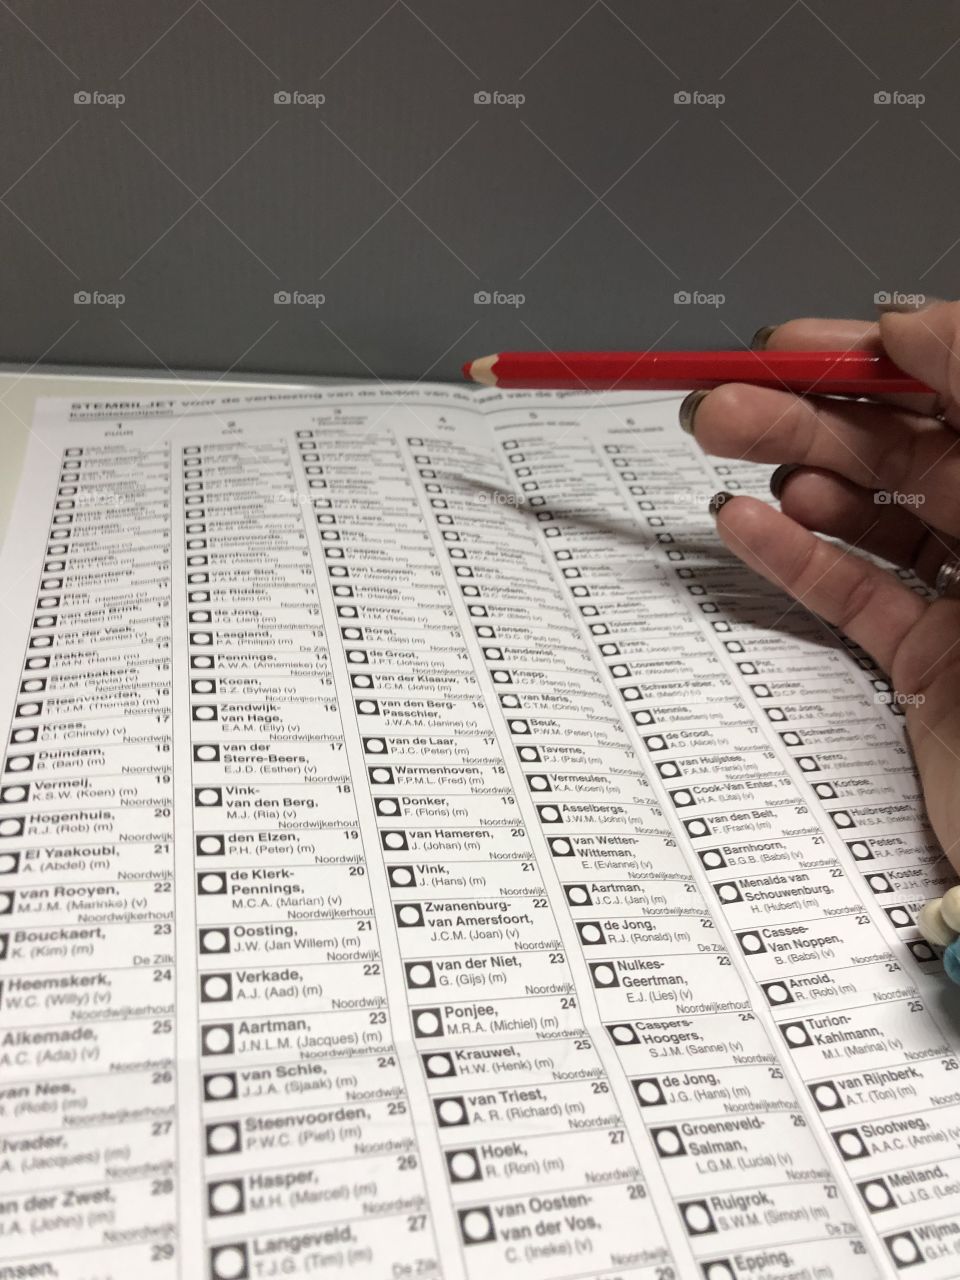 To vote